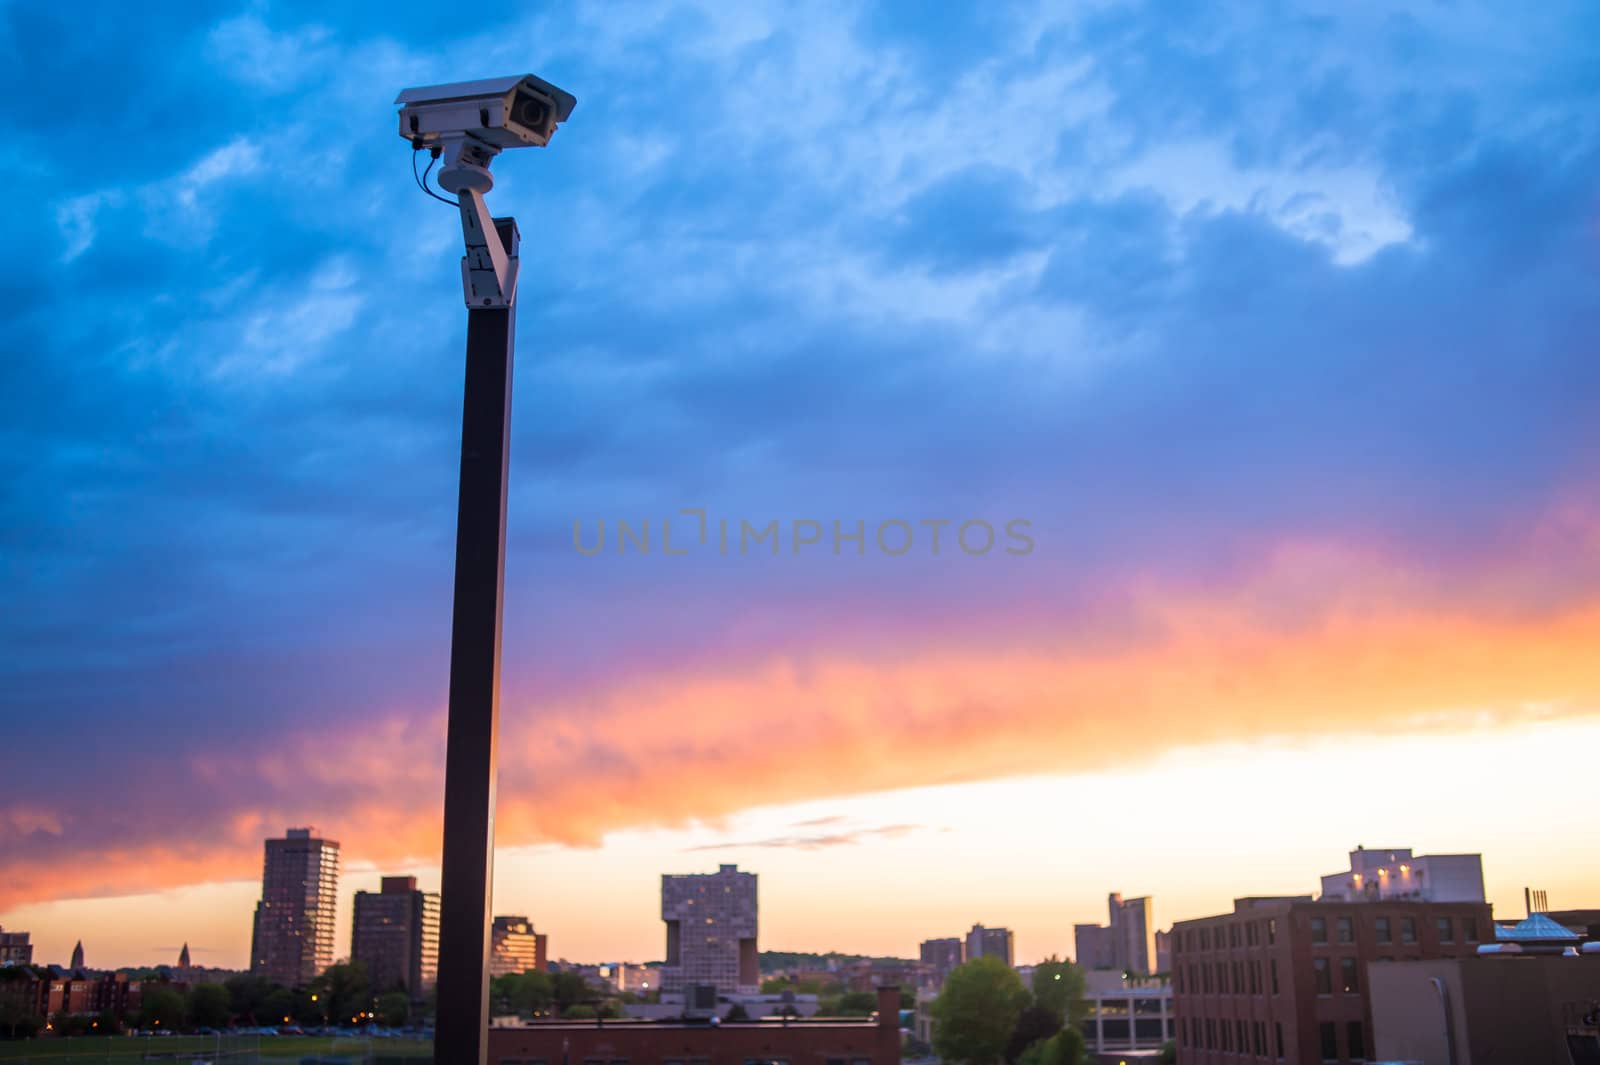 Urban security video camera outdoors at sunset